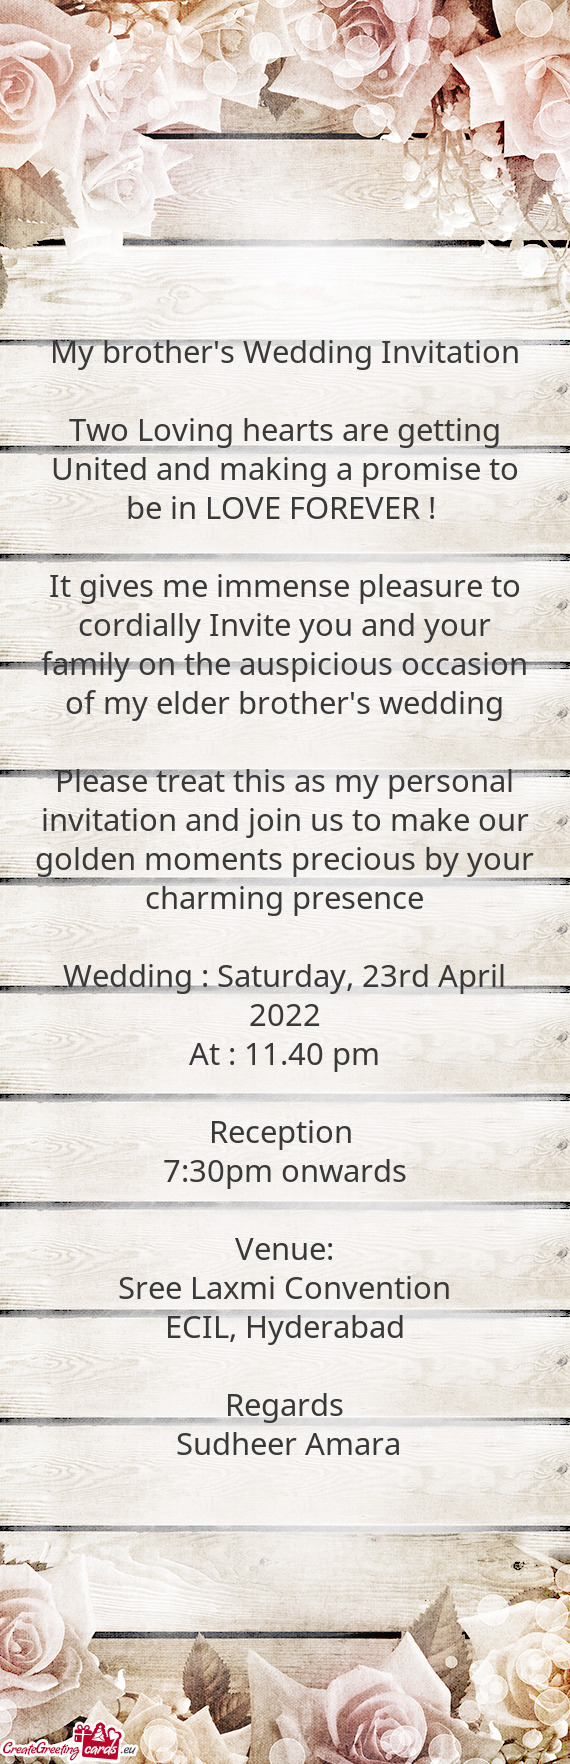 Wedding : Saturday, 23rd April 2022